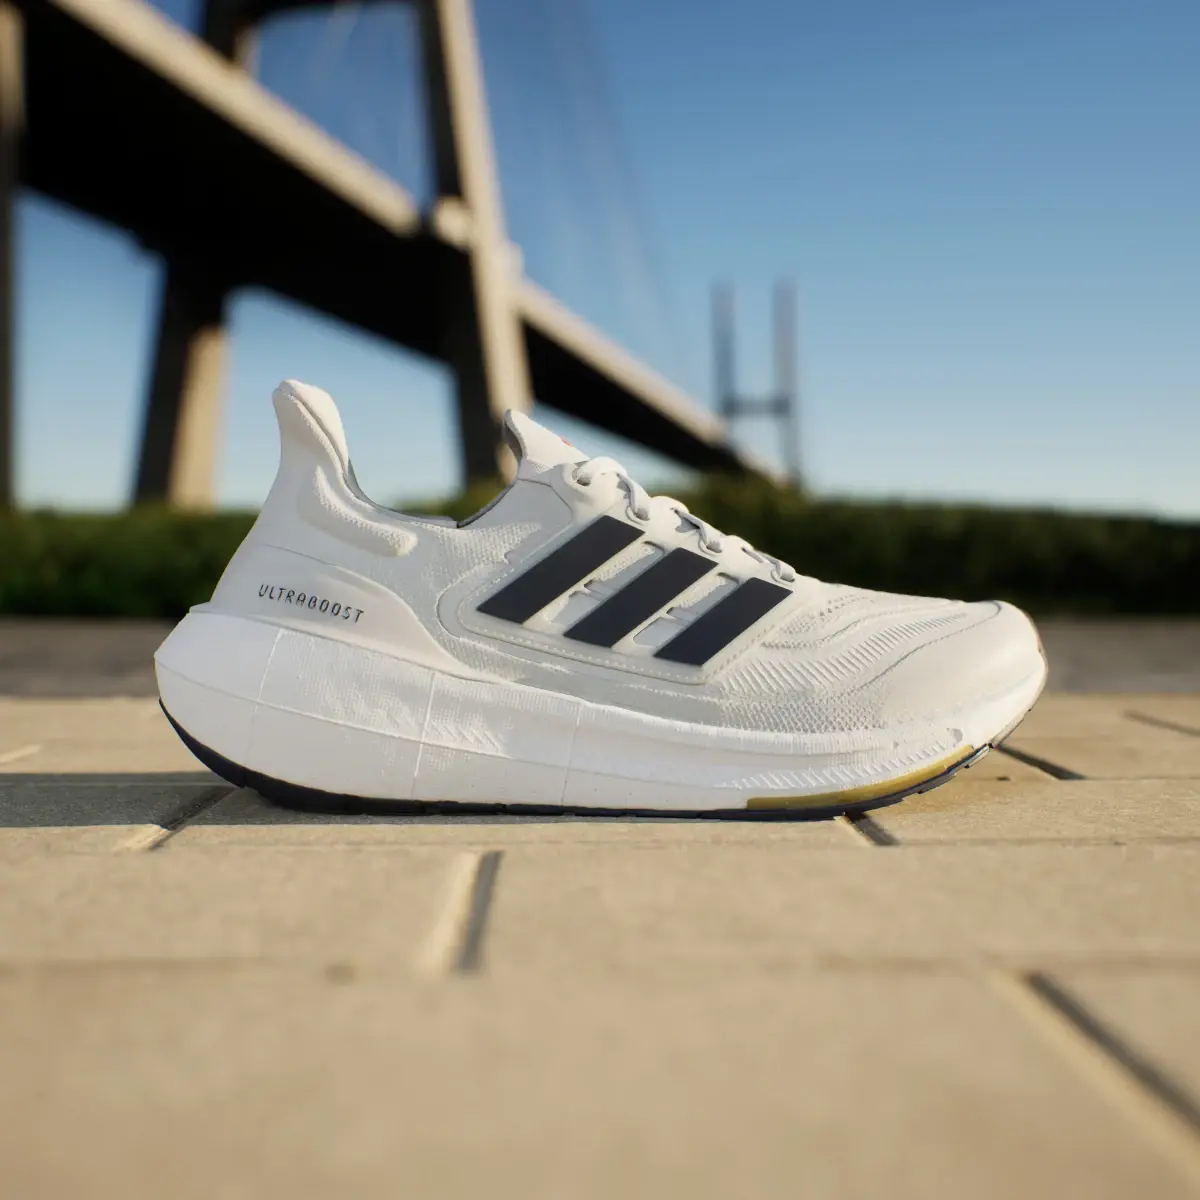 Adidas Ultraboost Light Shoes. 2